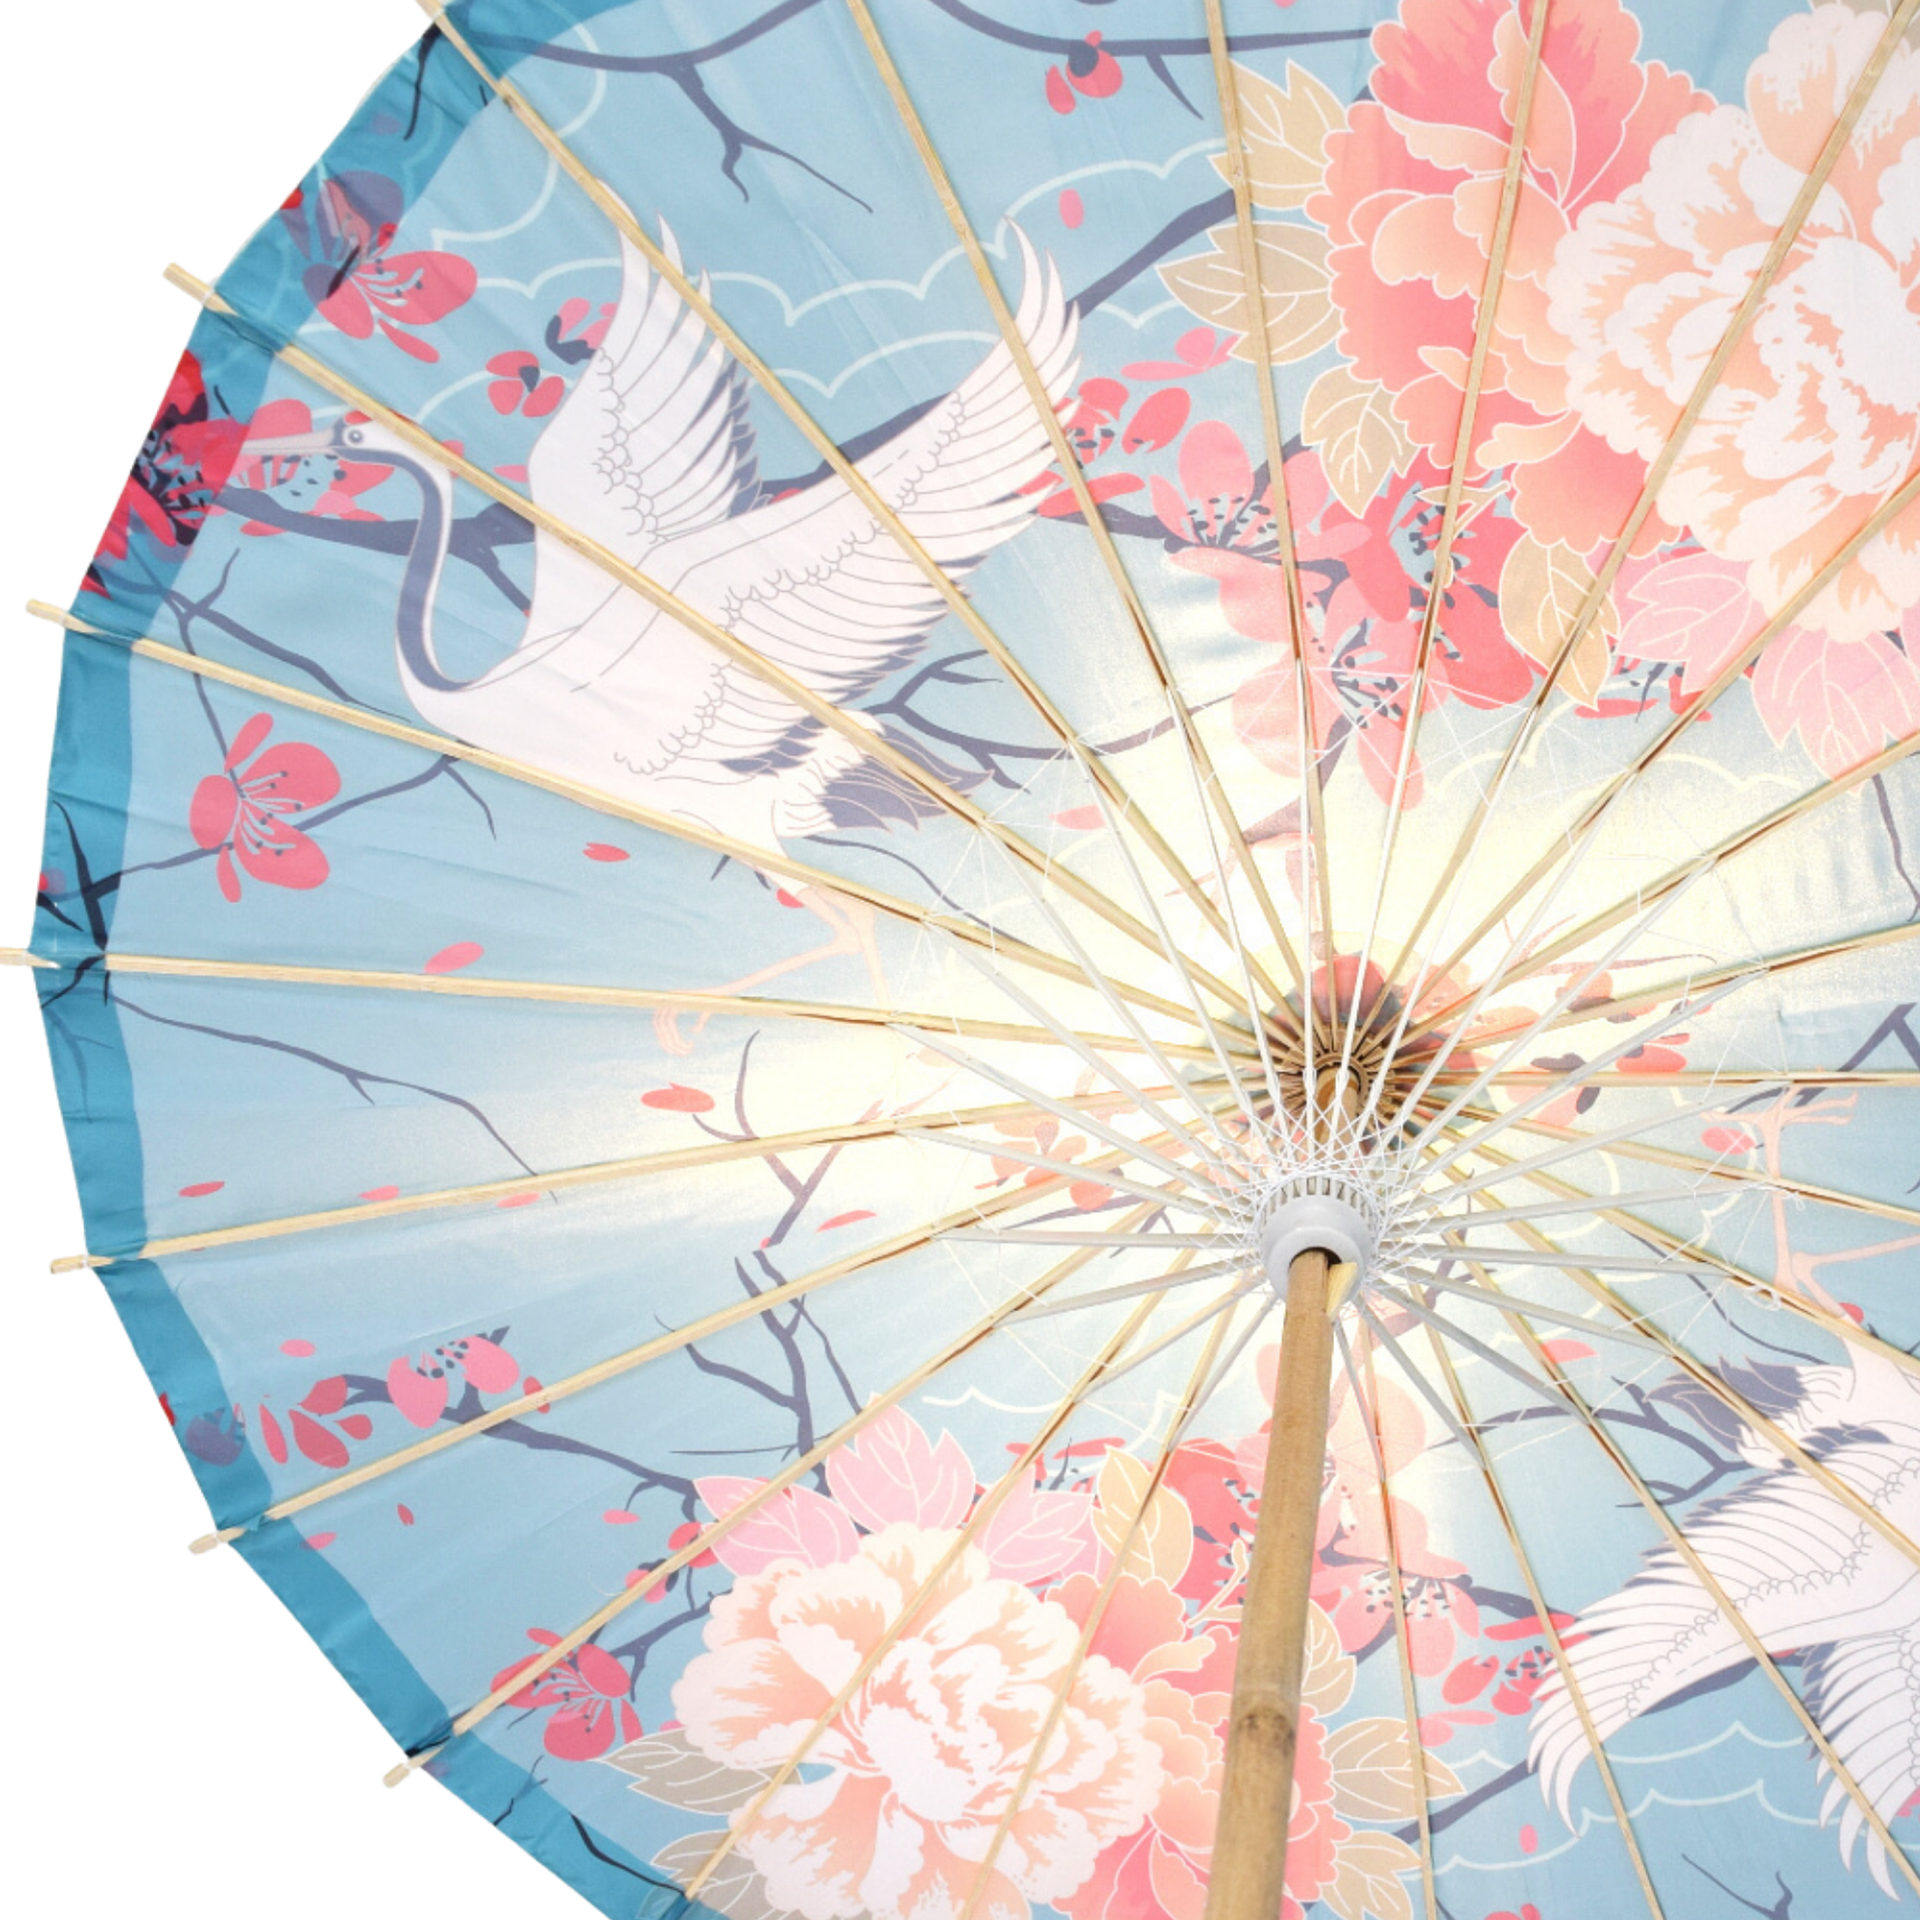 32 Inch Crane and Cherry Blossom Premium Nylon Parasol Umbrella with Elegant Handle